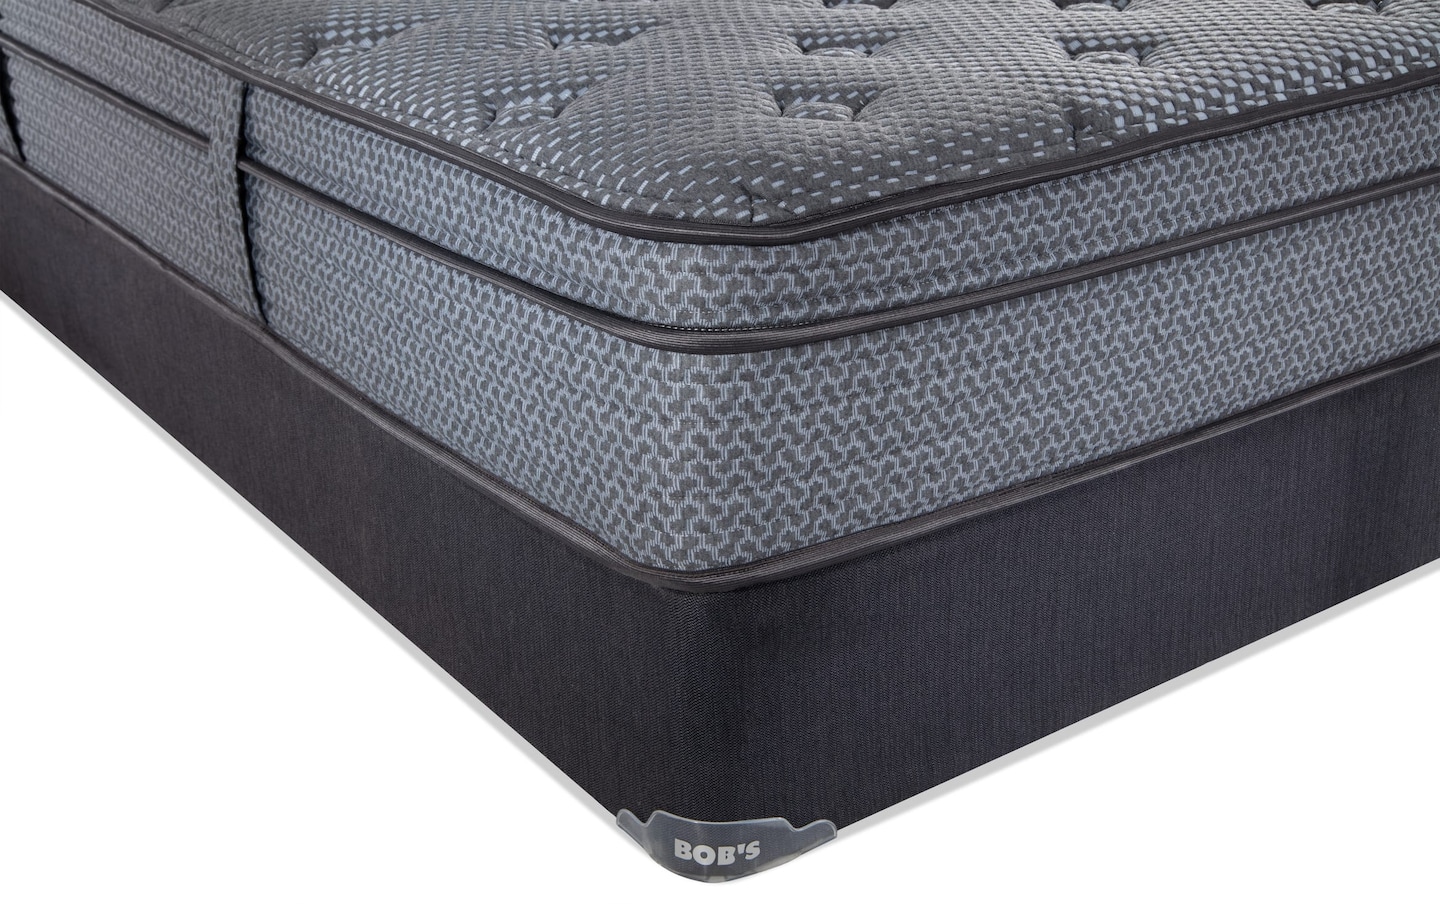 bobs synergy plush mattress